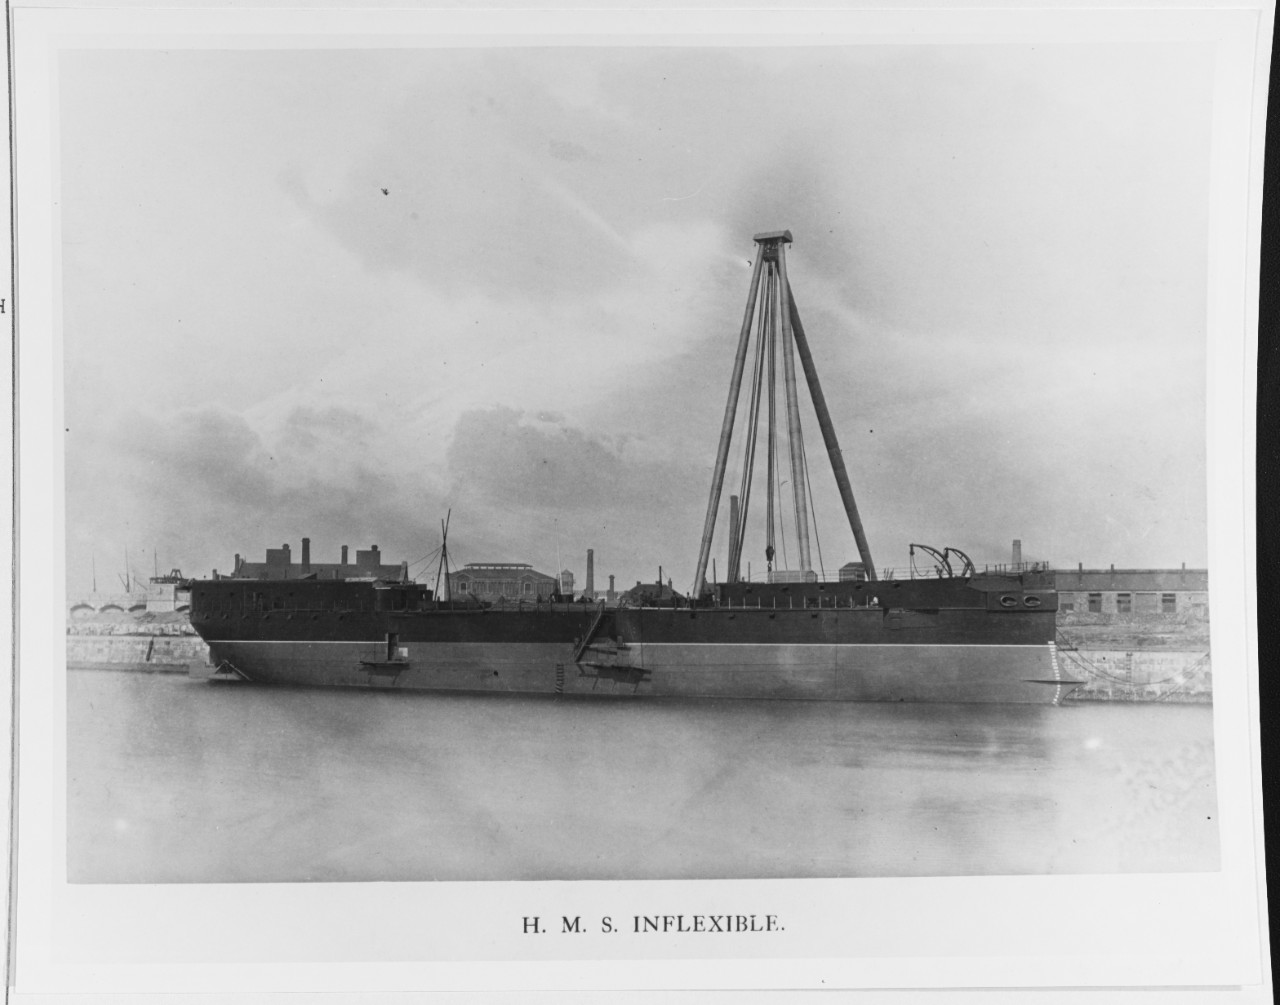 HMS INFLEXIBLE (British battleship, 1876)